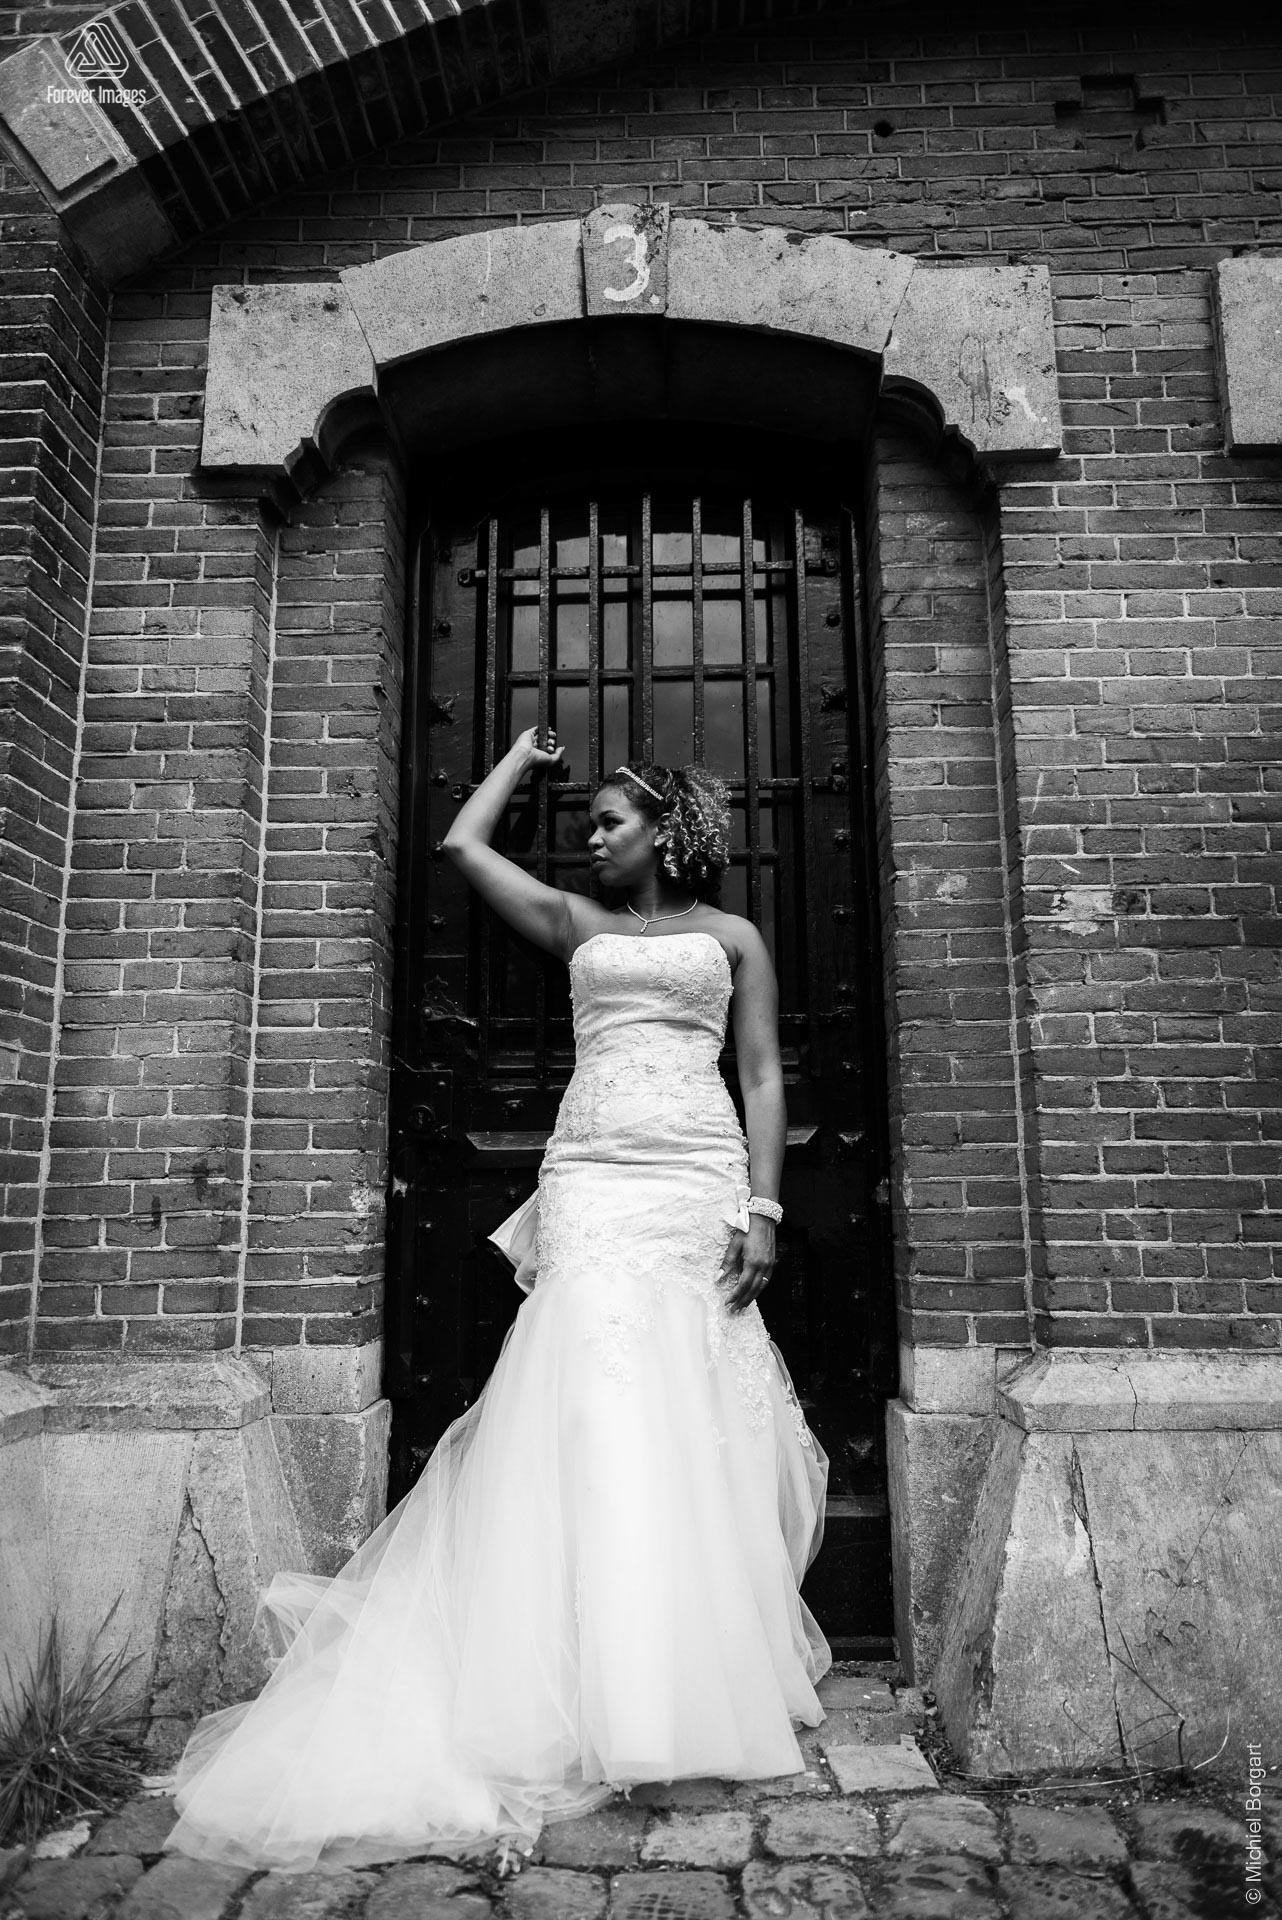 Bruidsfoto zwart-wit de poort bewaken | Kamiel Elseric | Bruidsfotograaf Michiel Borgart - Forever Images.